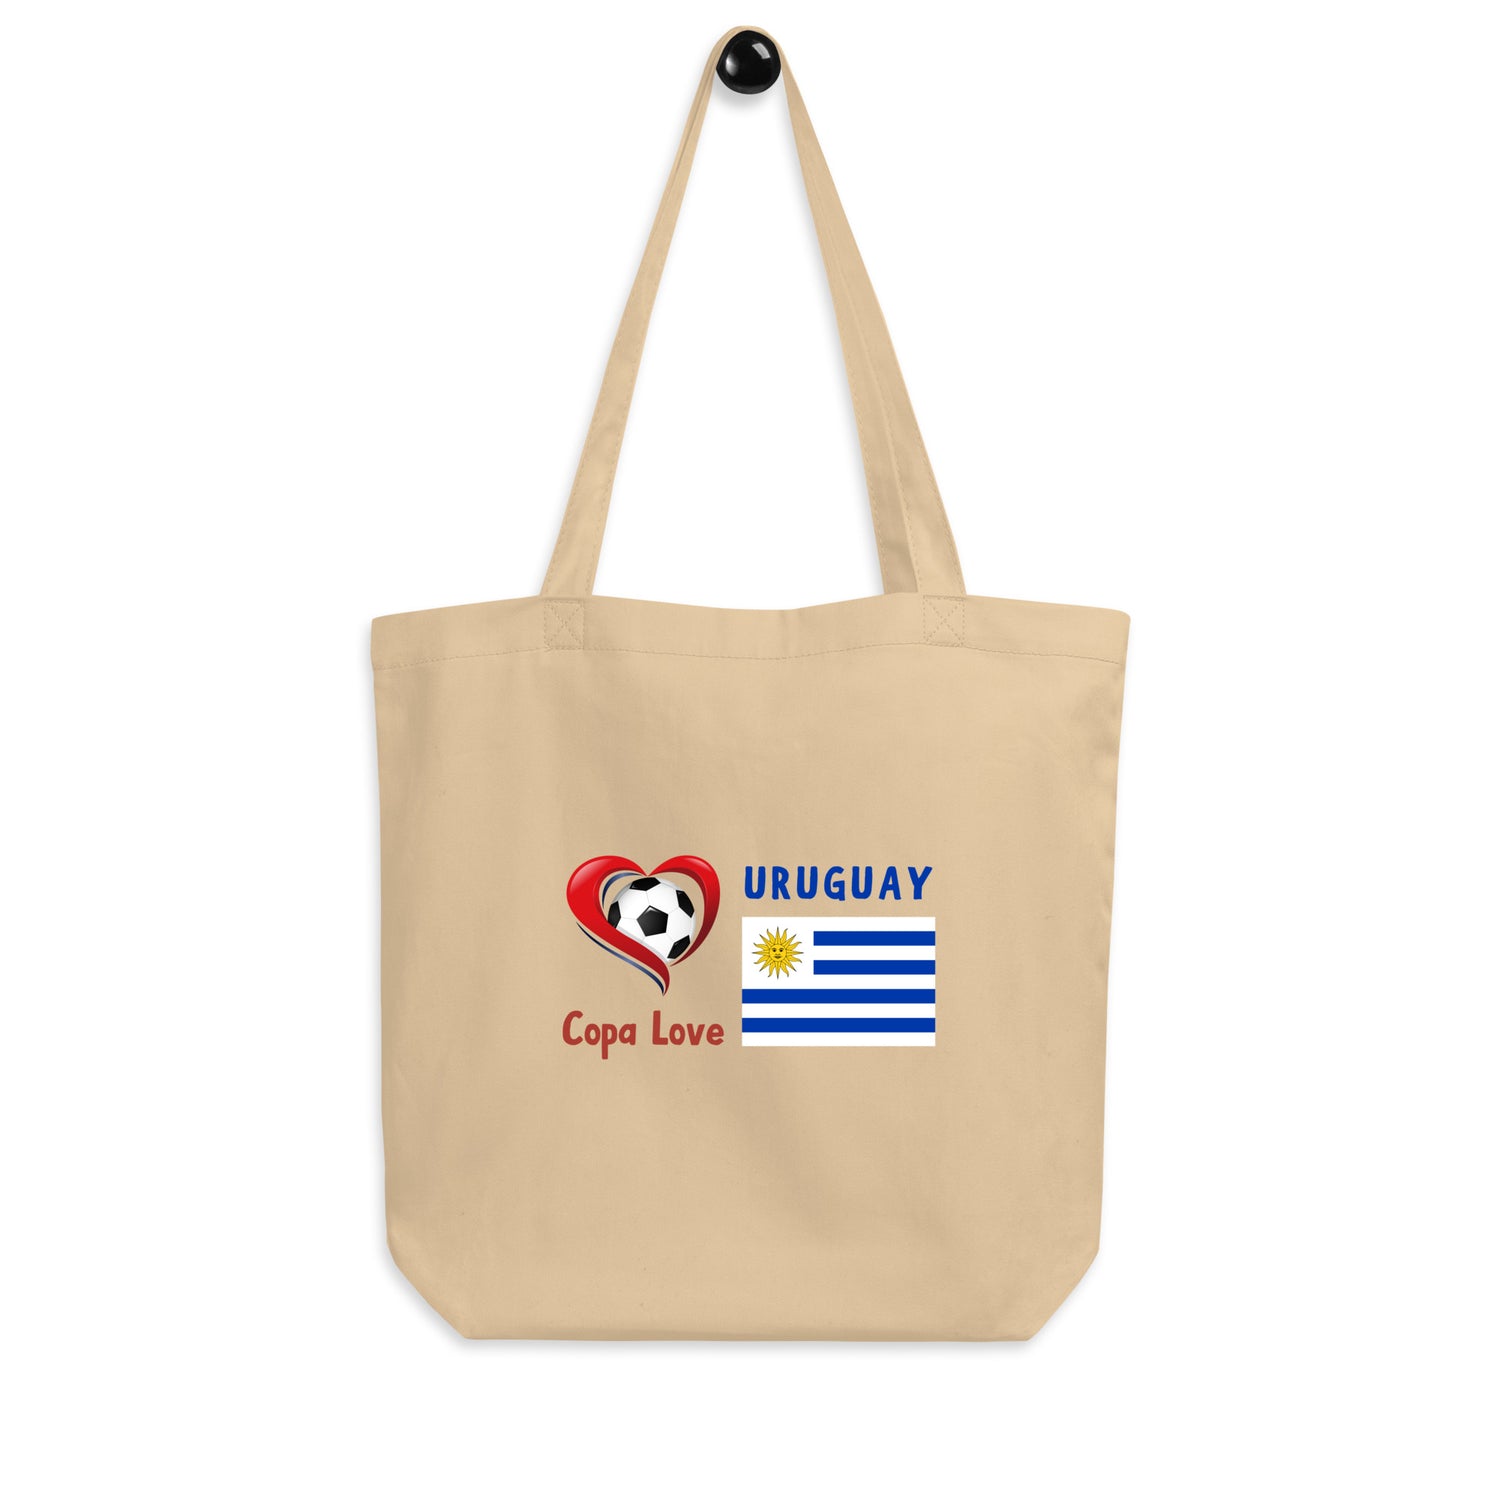 URUGUAY - Copa Love Eco Tote Bag